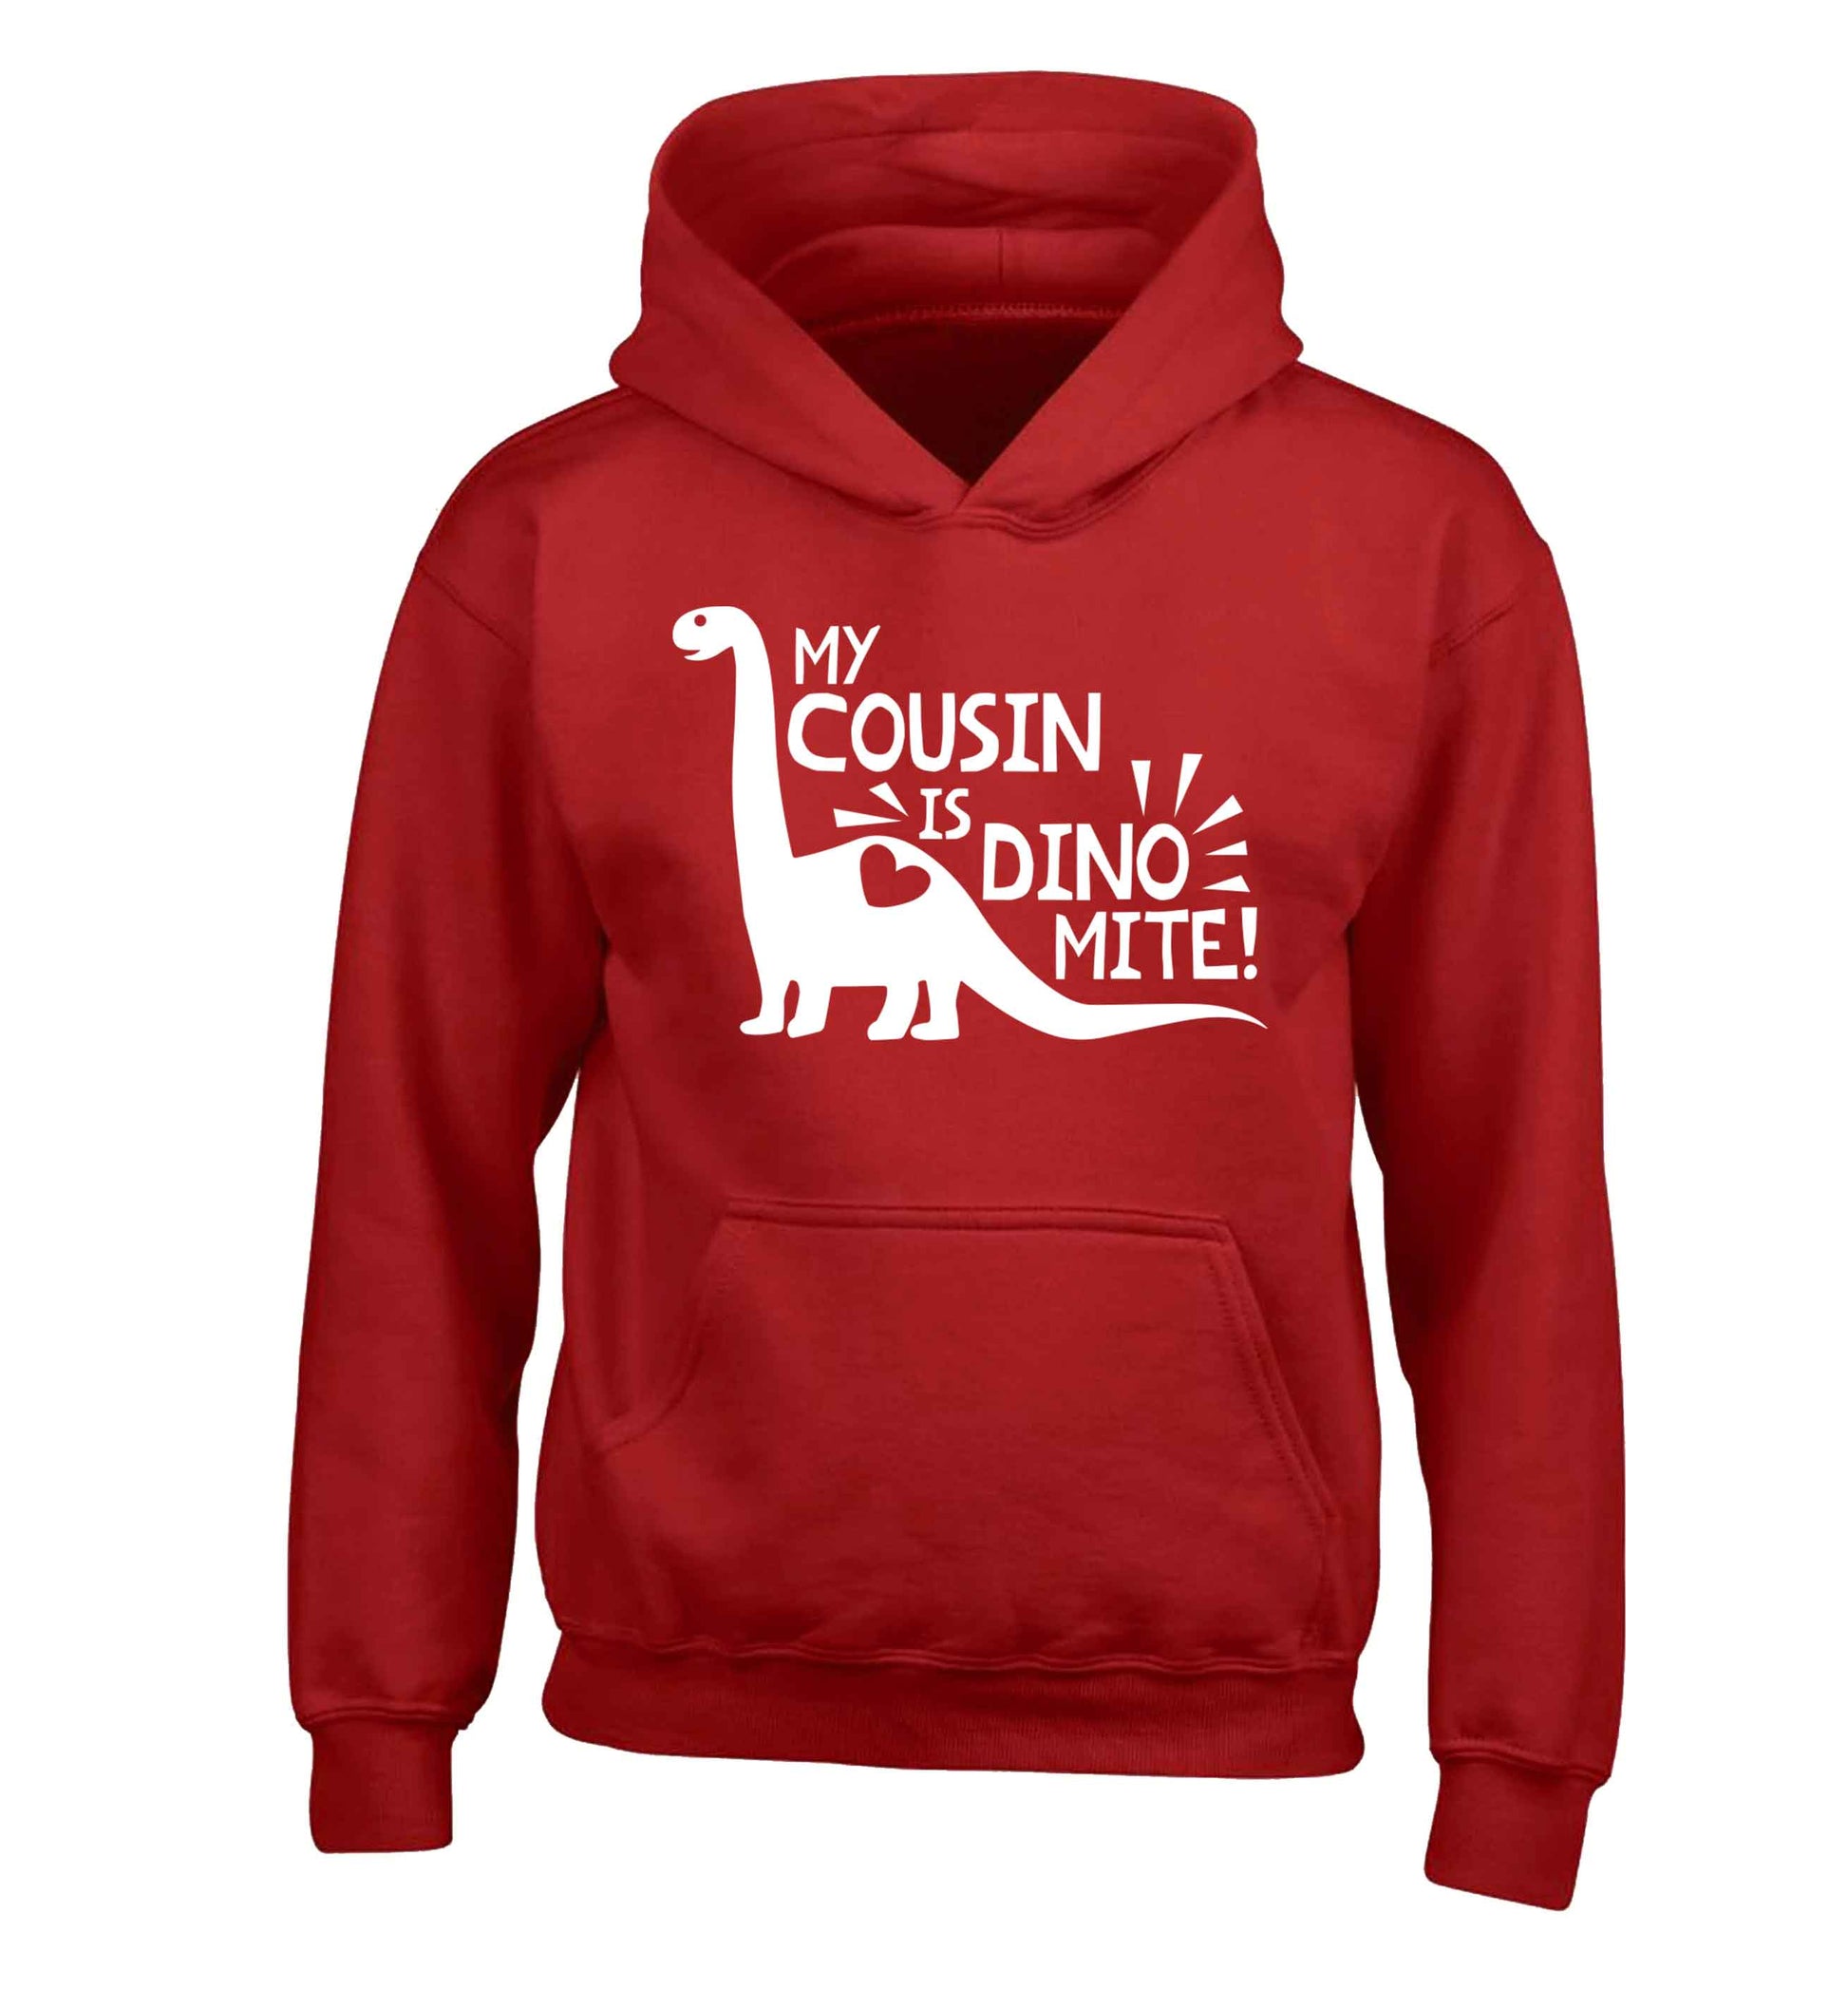 My cousin is dinomite! children's red hoodie 12-13 Years